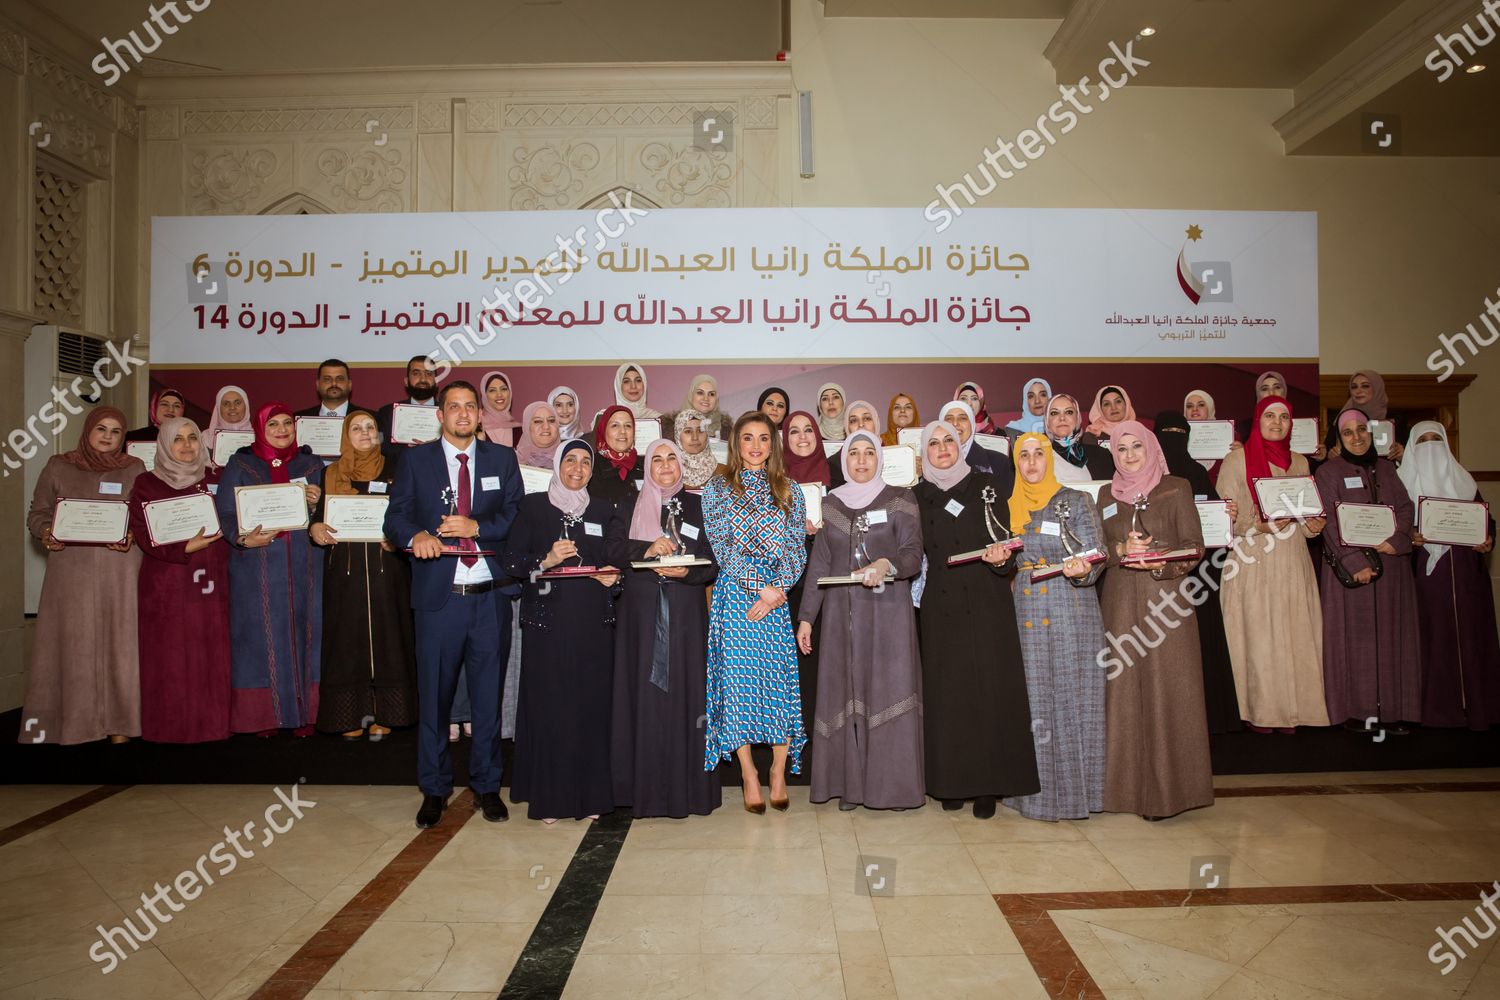 queen-rania-award-for-excellence-in-education-amman-jordan-shutterstock-editorial-10495939a.jpg